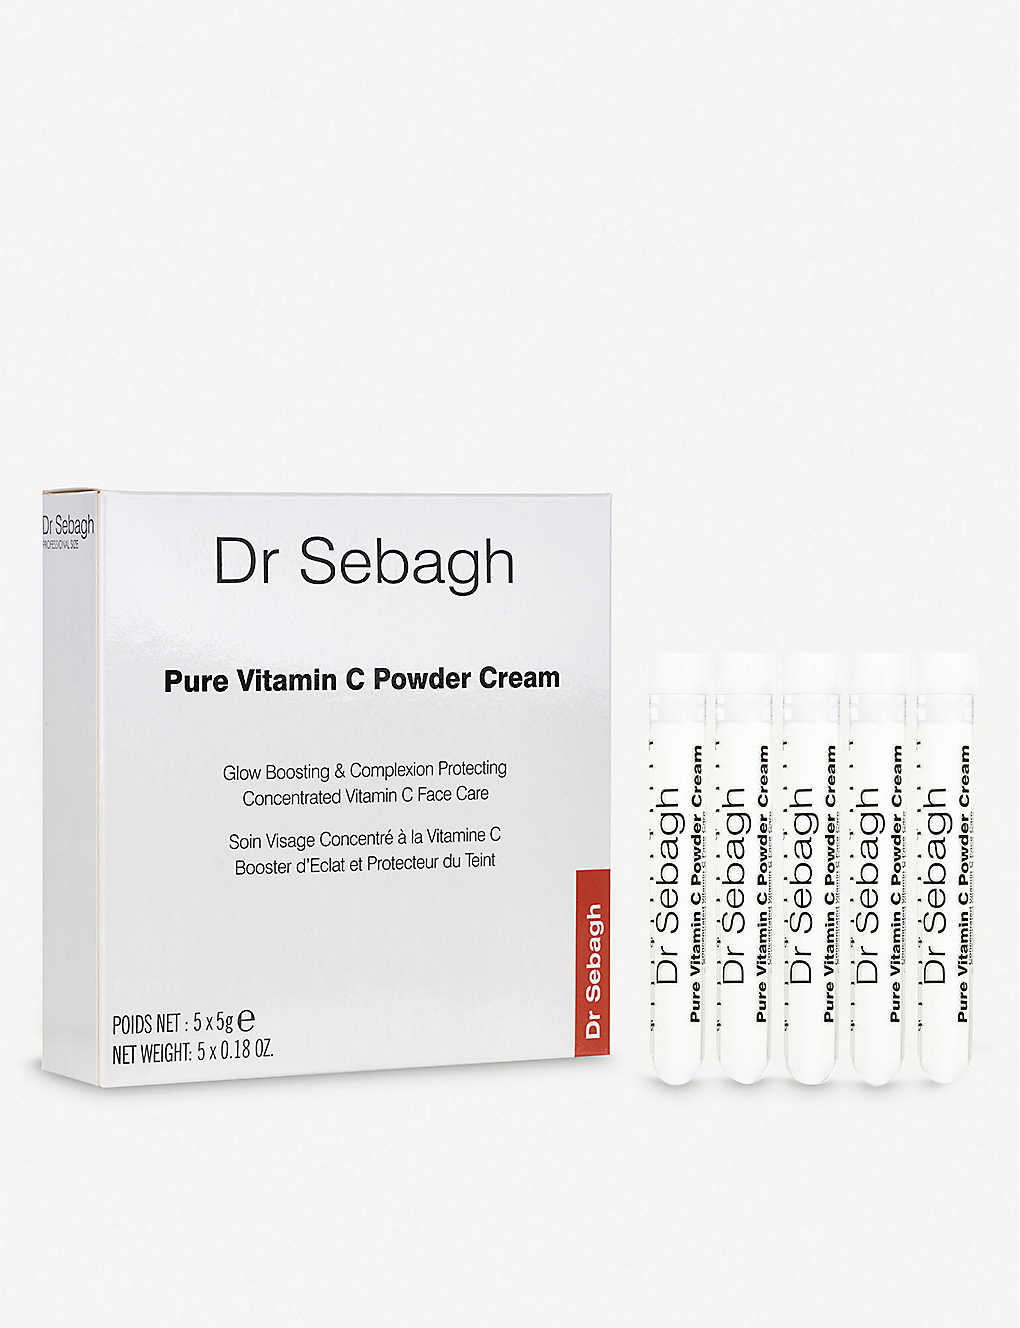 Dr Sebagh Pro Pure Vitamin C Powder Cream